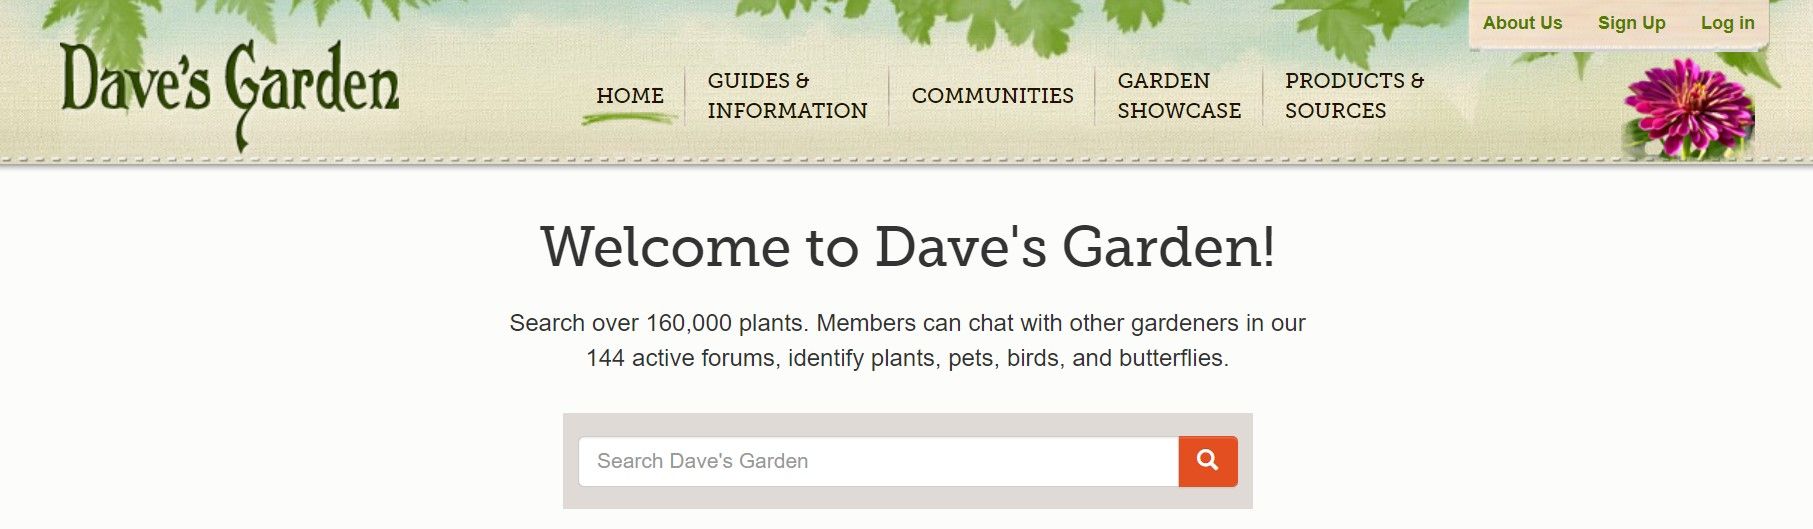 Dave's Garden screenshot